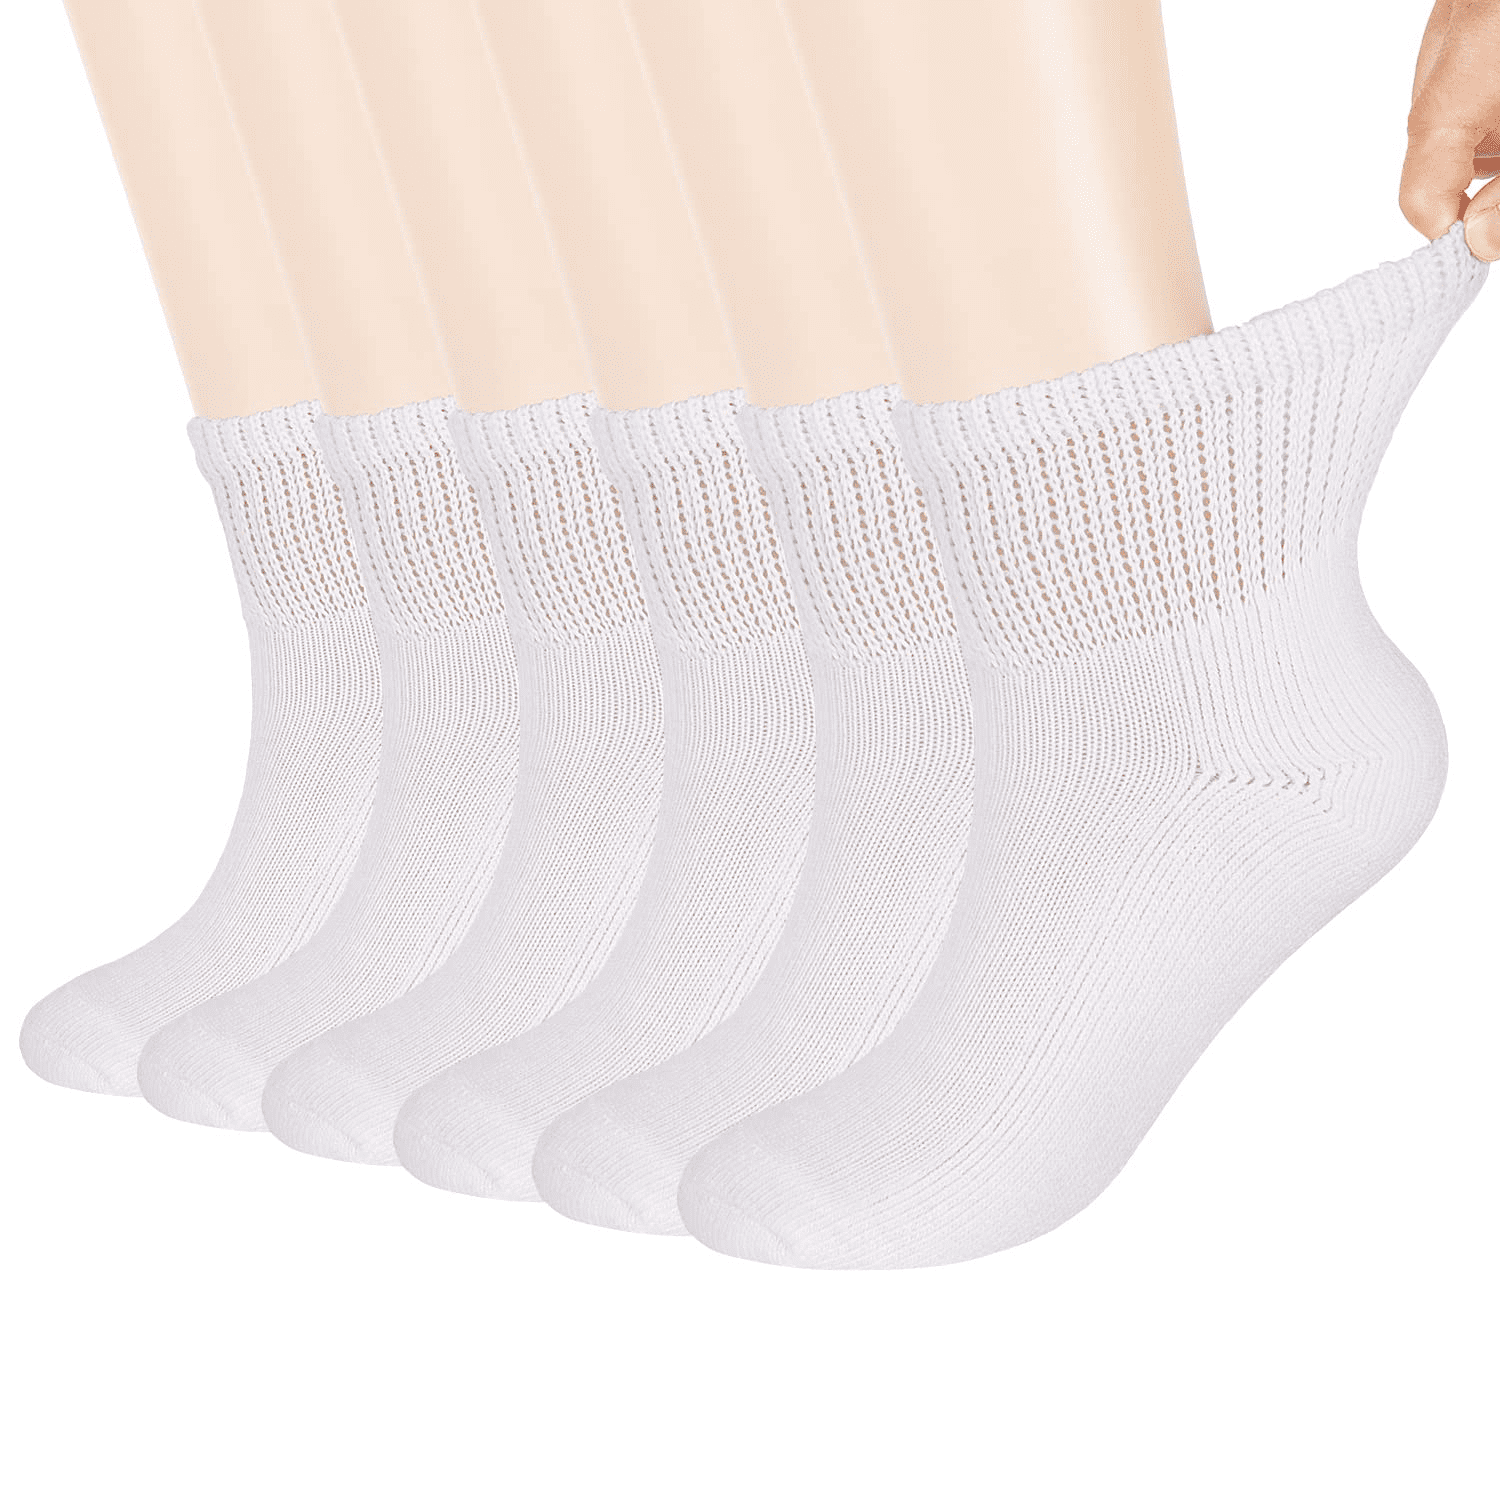 MD FootThera Diabetic Quarter Socks for Women Non Binding Top - Walmart.com